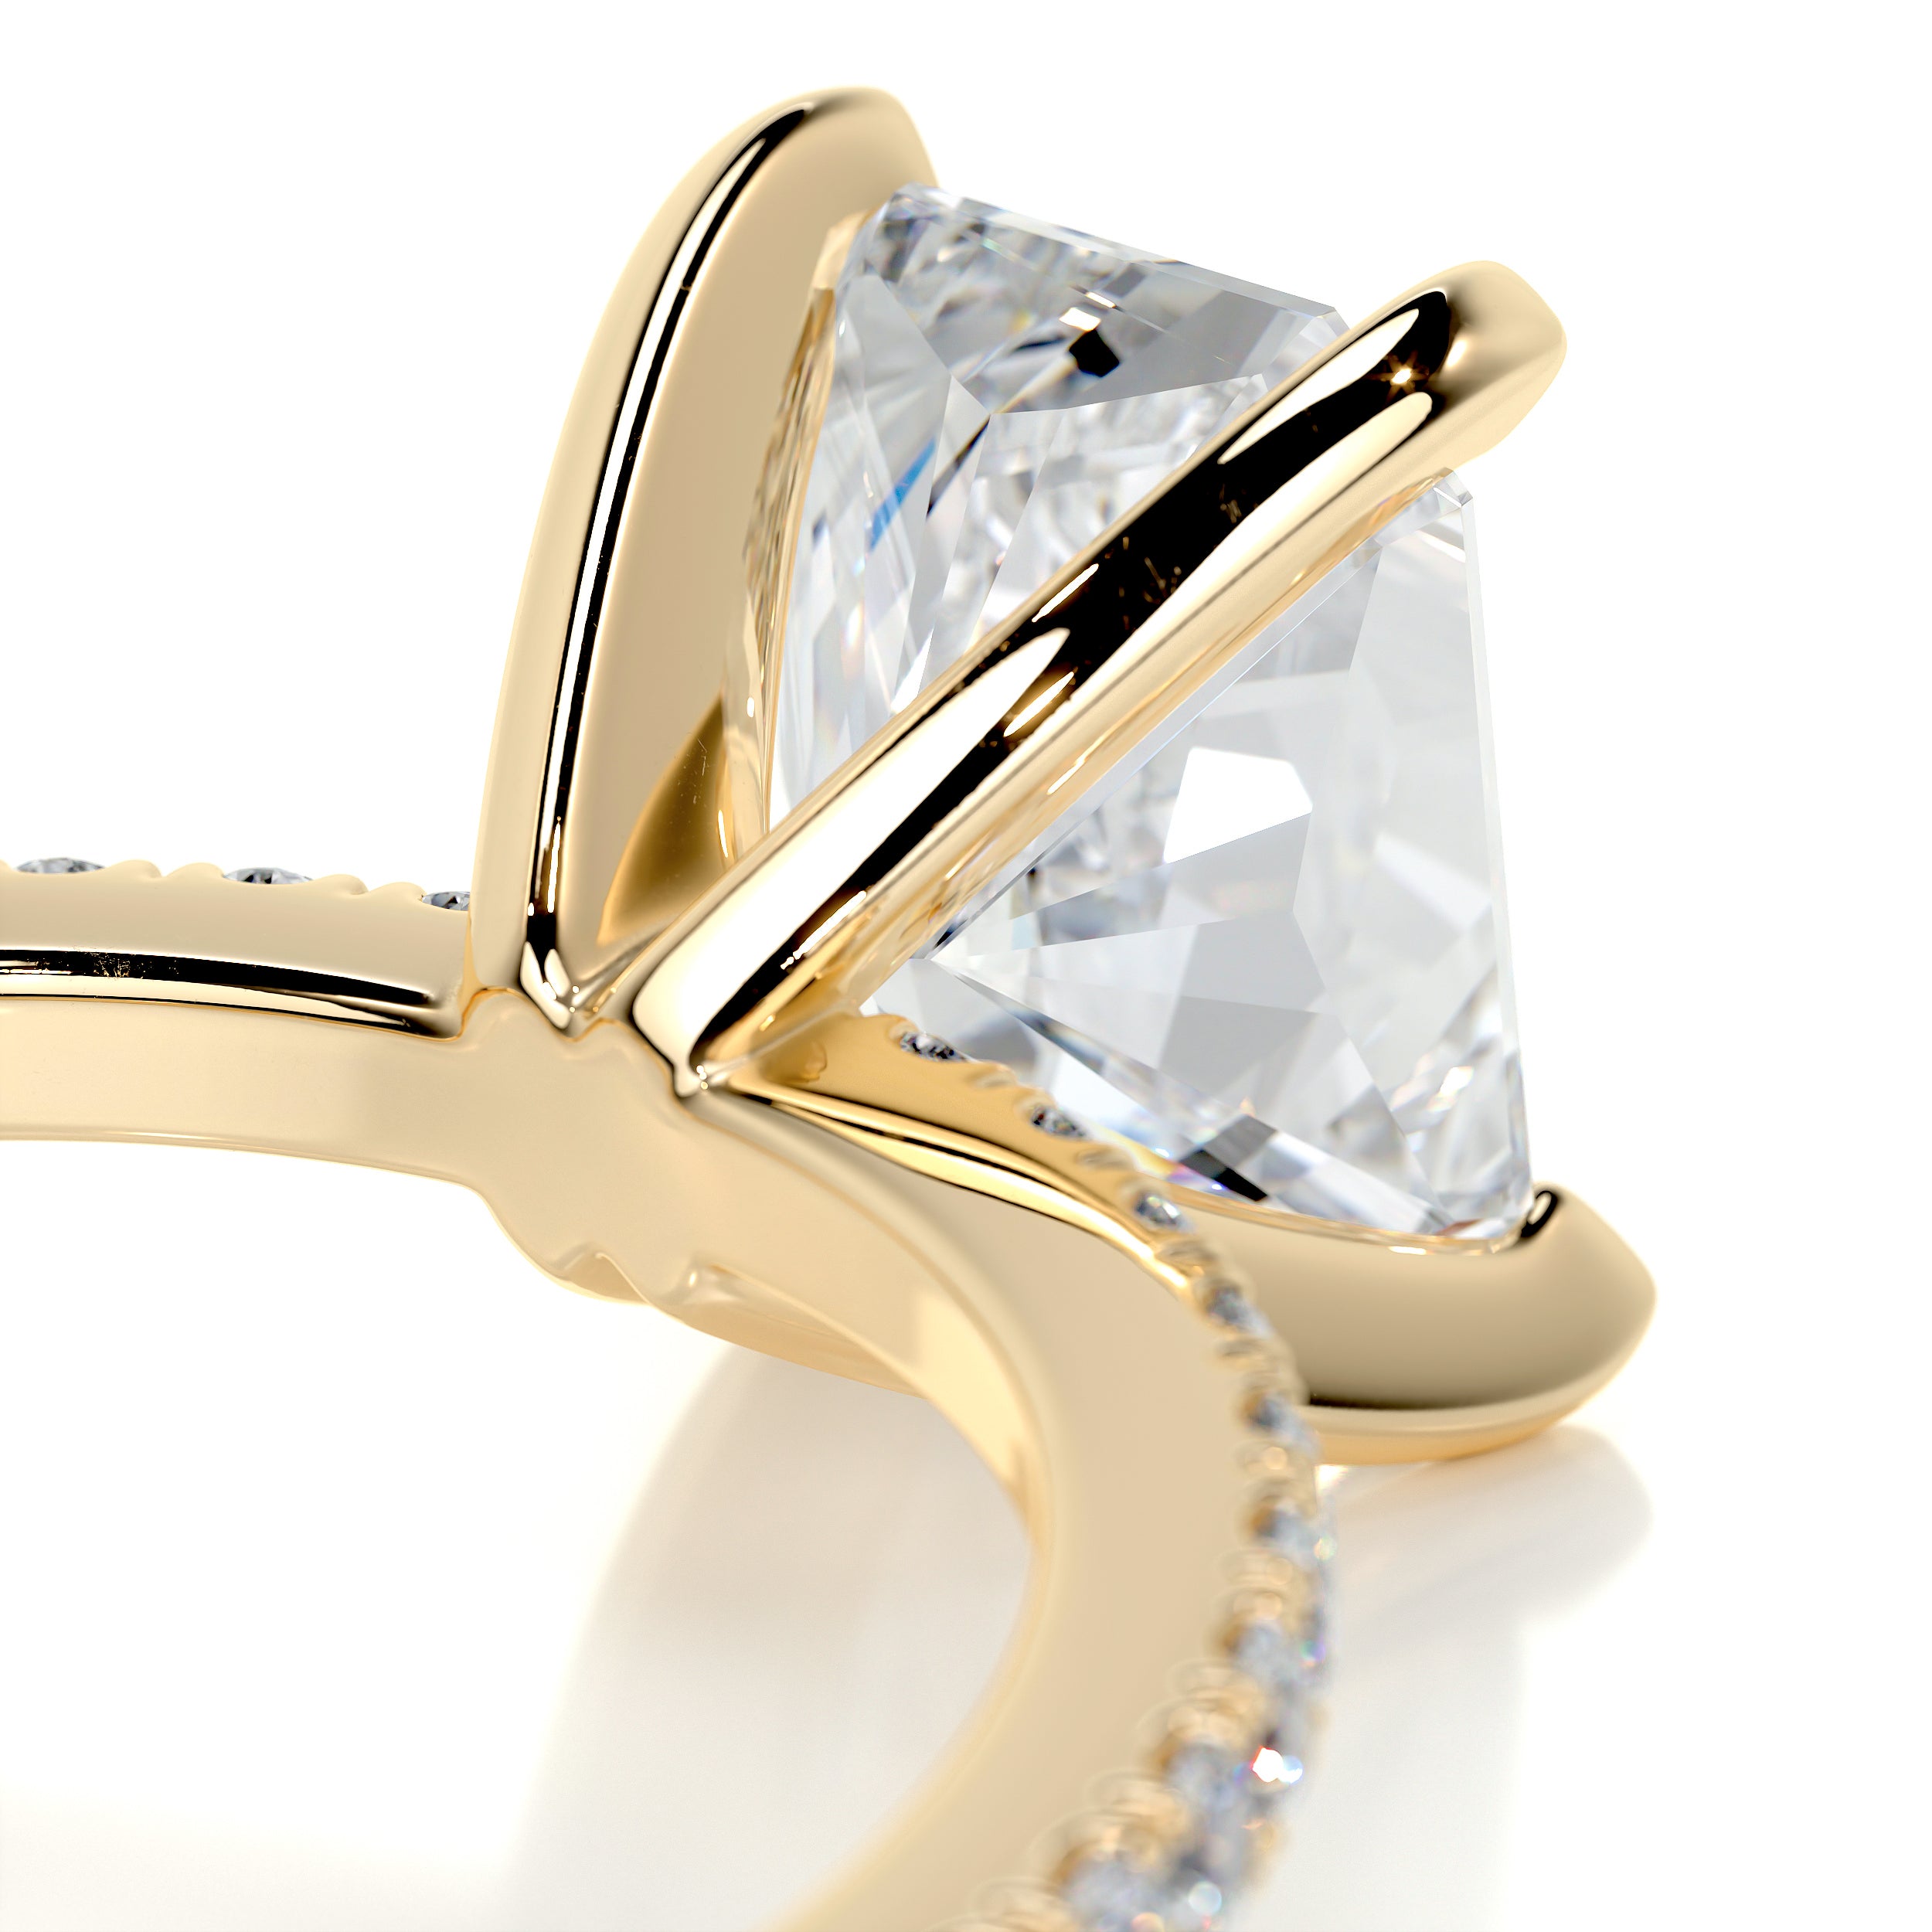 Audrey Diamond Engagement Ring   (1.8 Carat) -18K Yellow Gold